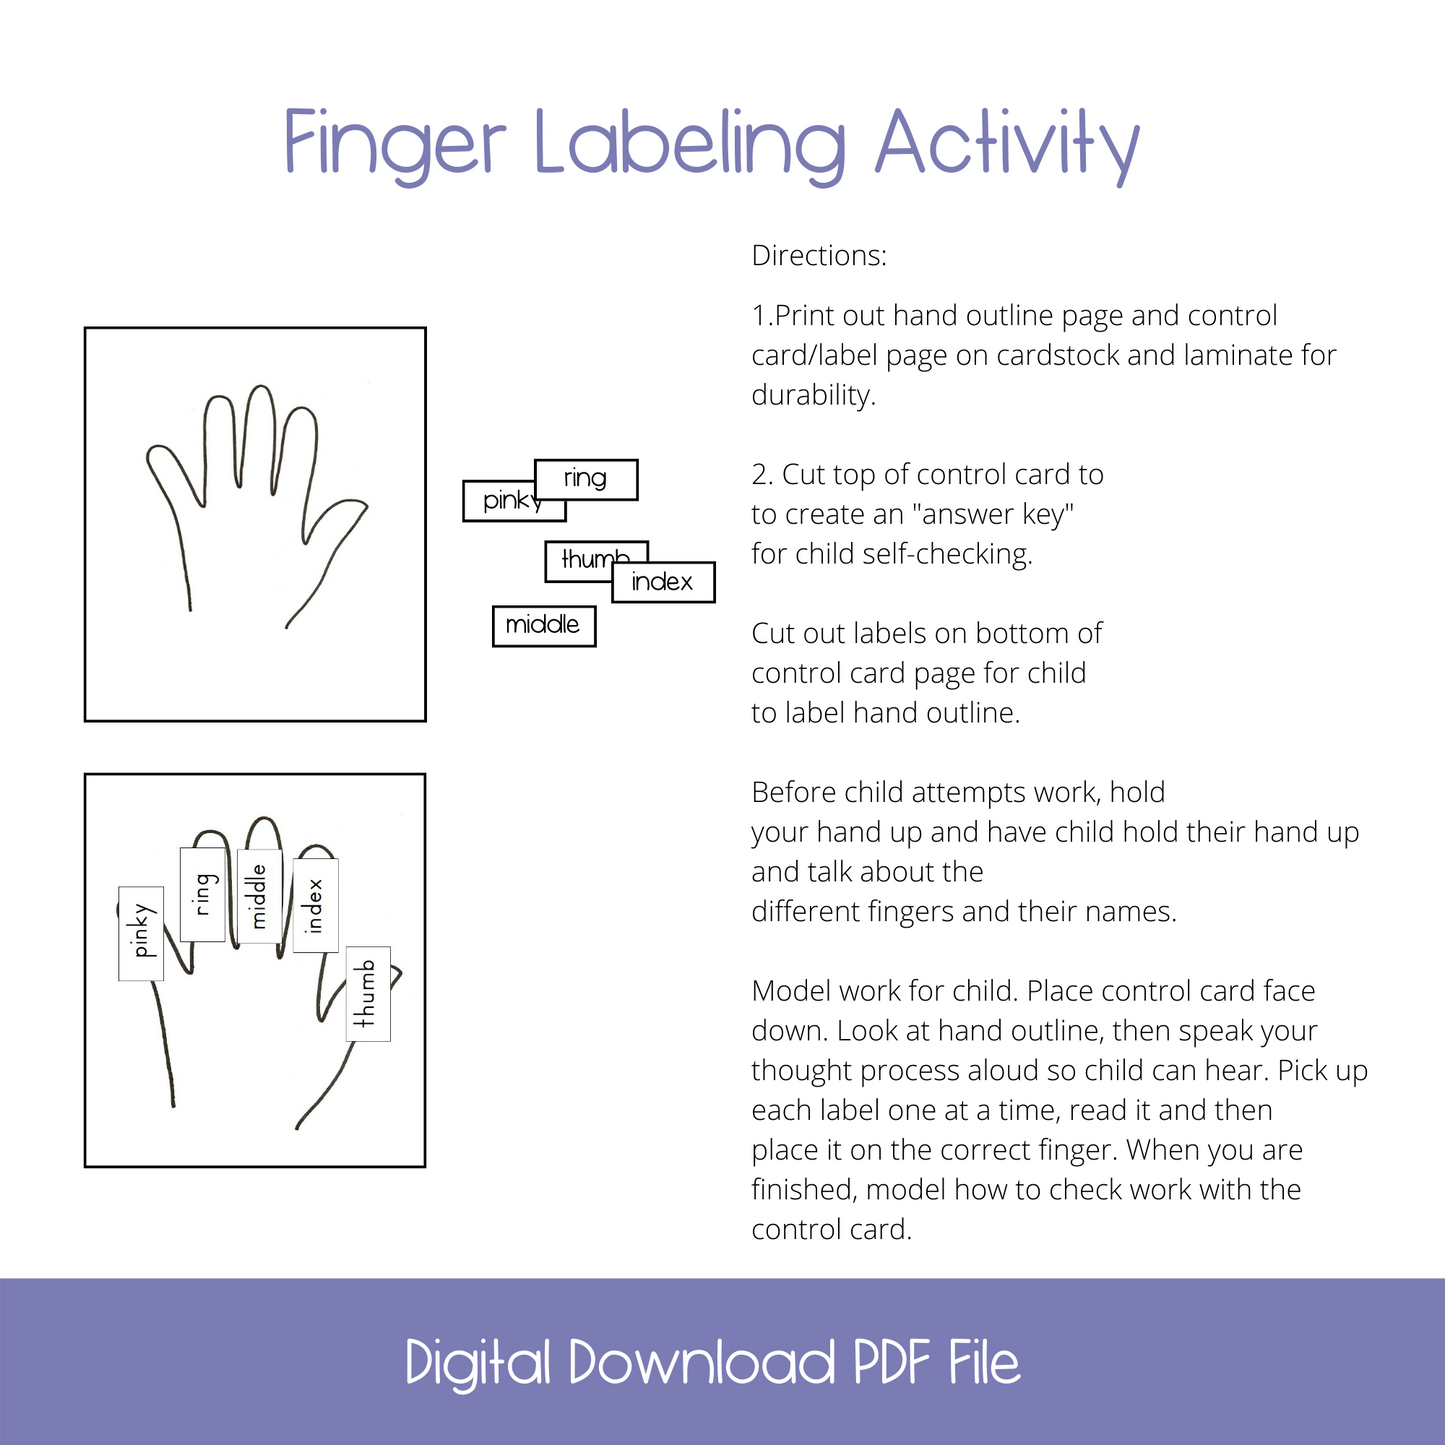 Finger-Labeling Activity- FREE DOWNLOAD